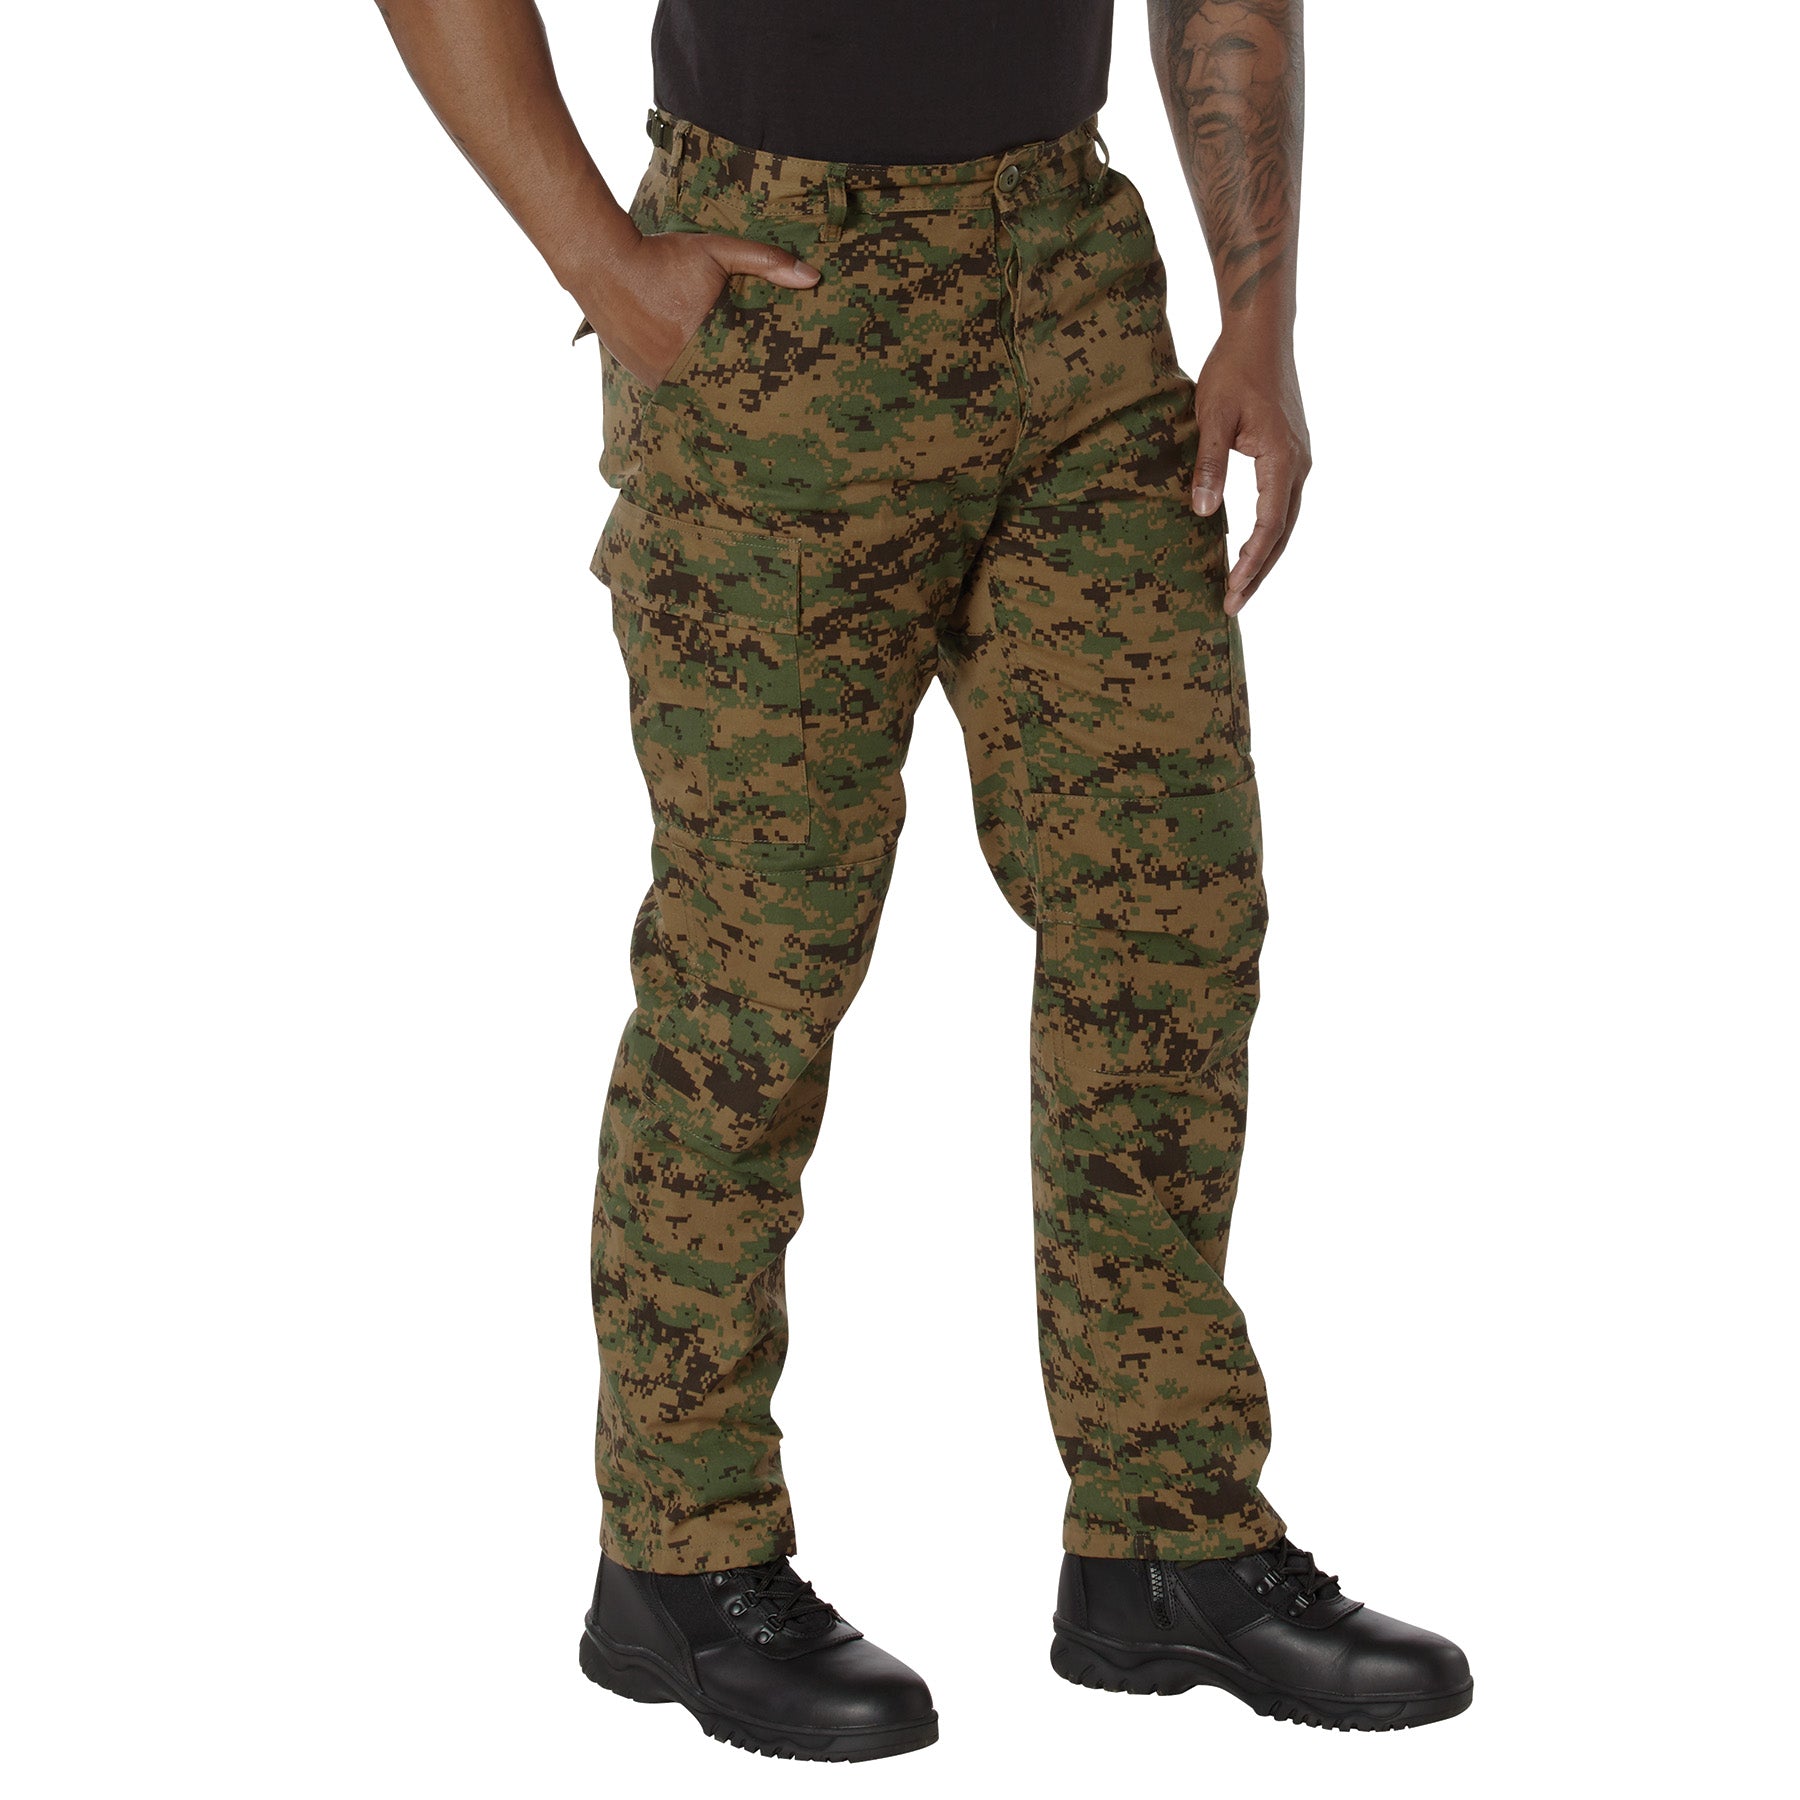 Rothco Tactical BDU Pants - Woodland Camo - Long Lengths